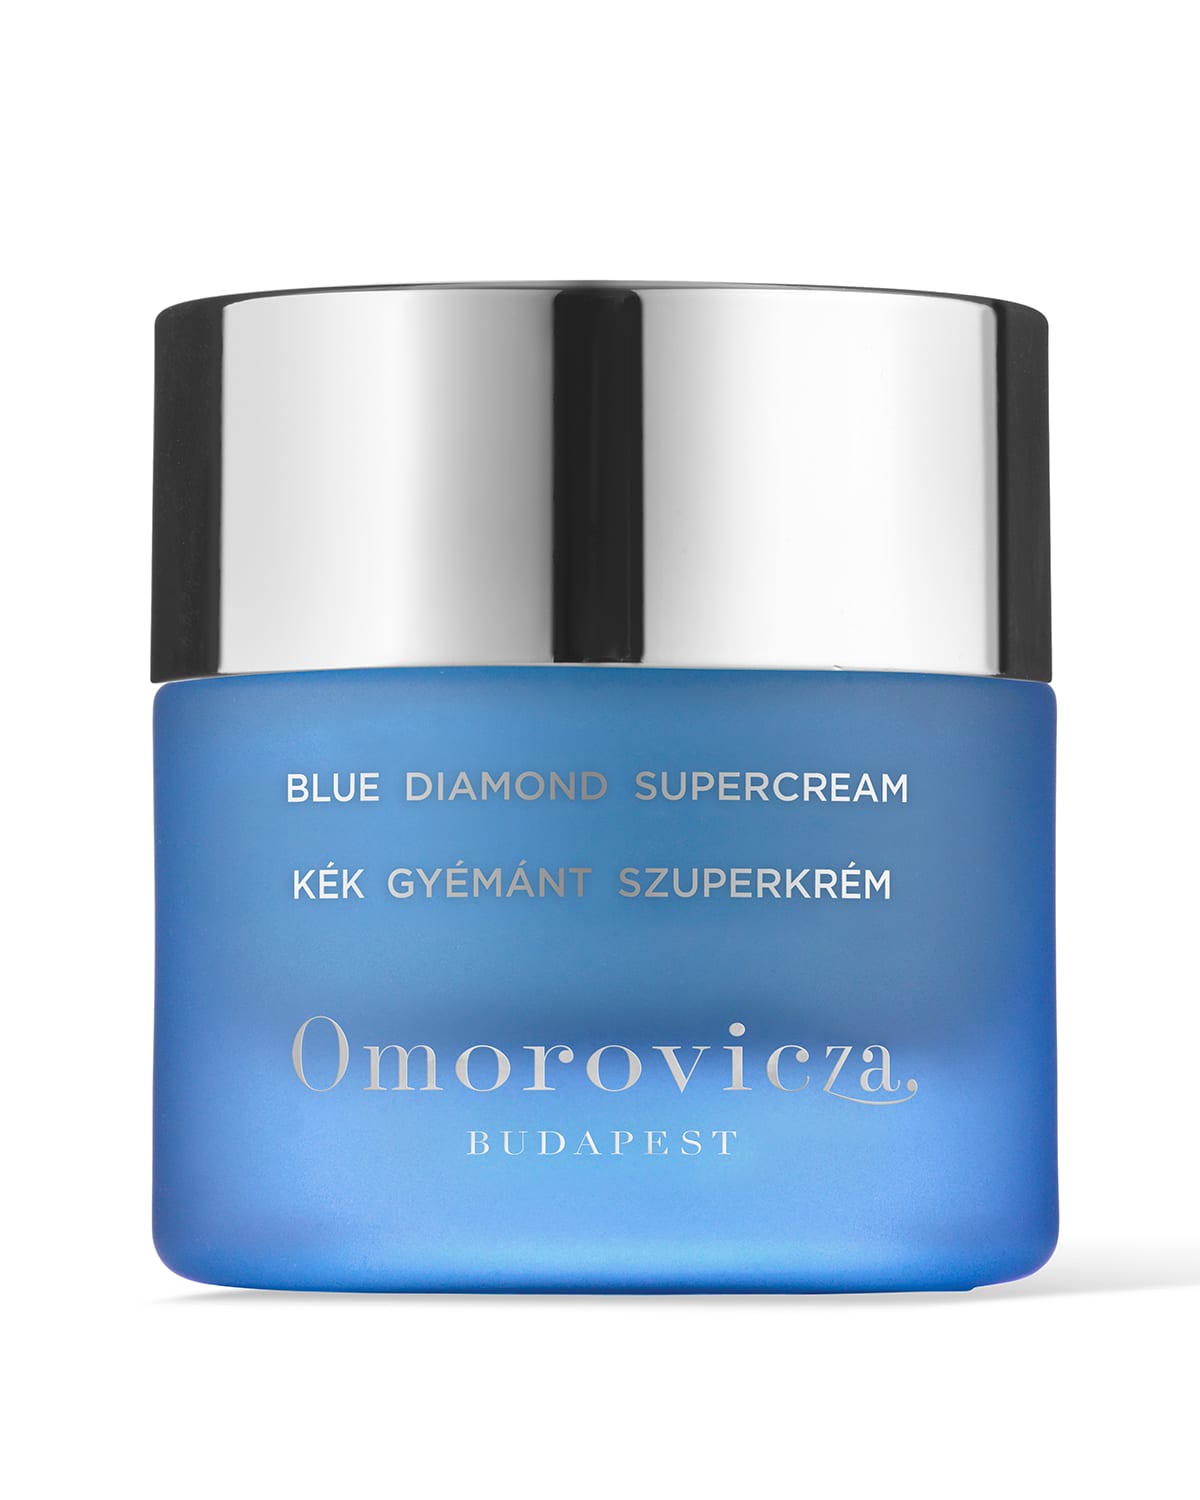 Blue Diamond Supercream, 1.7 oz.